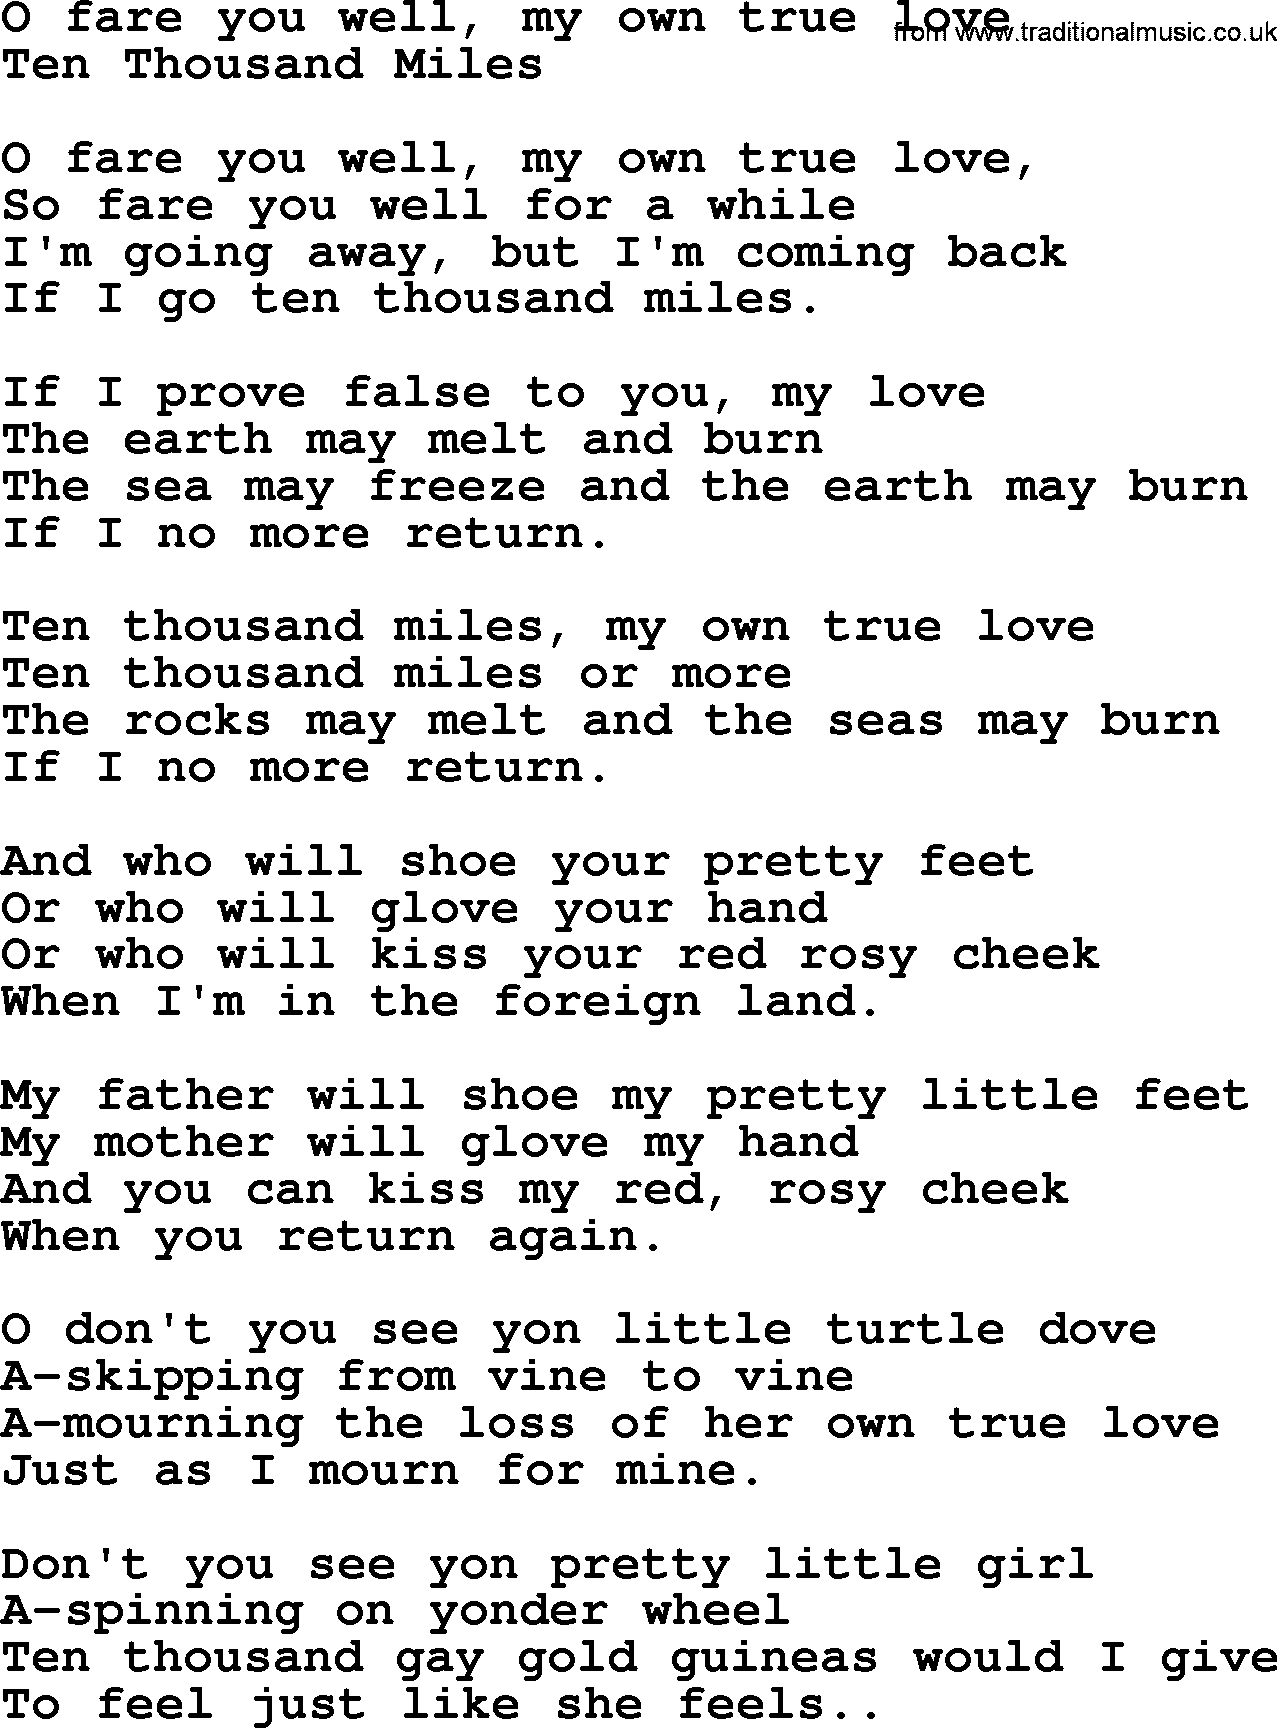 Sea Song or Shantie: O Fare You Well My Own True Love, lyrics